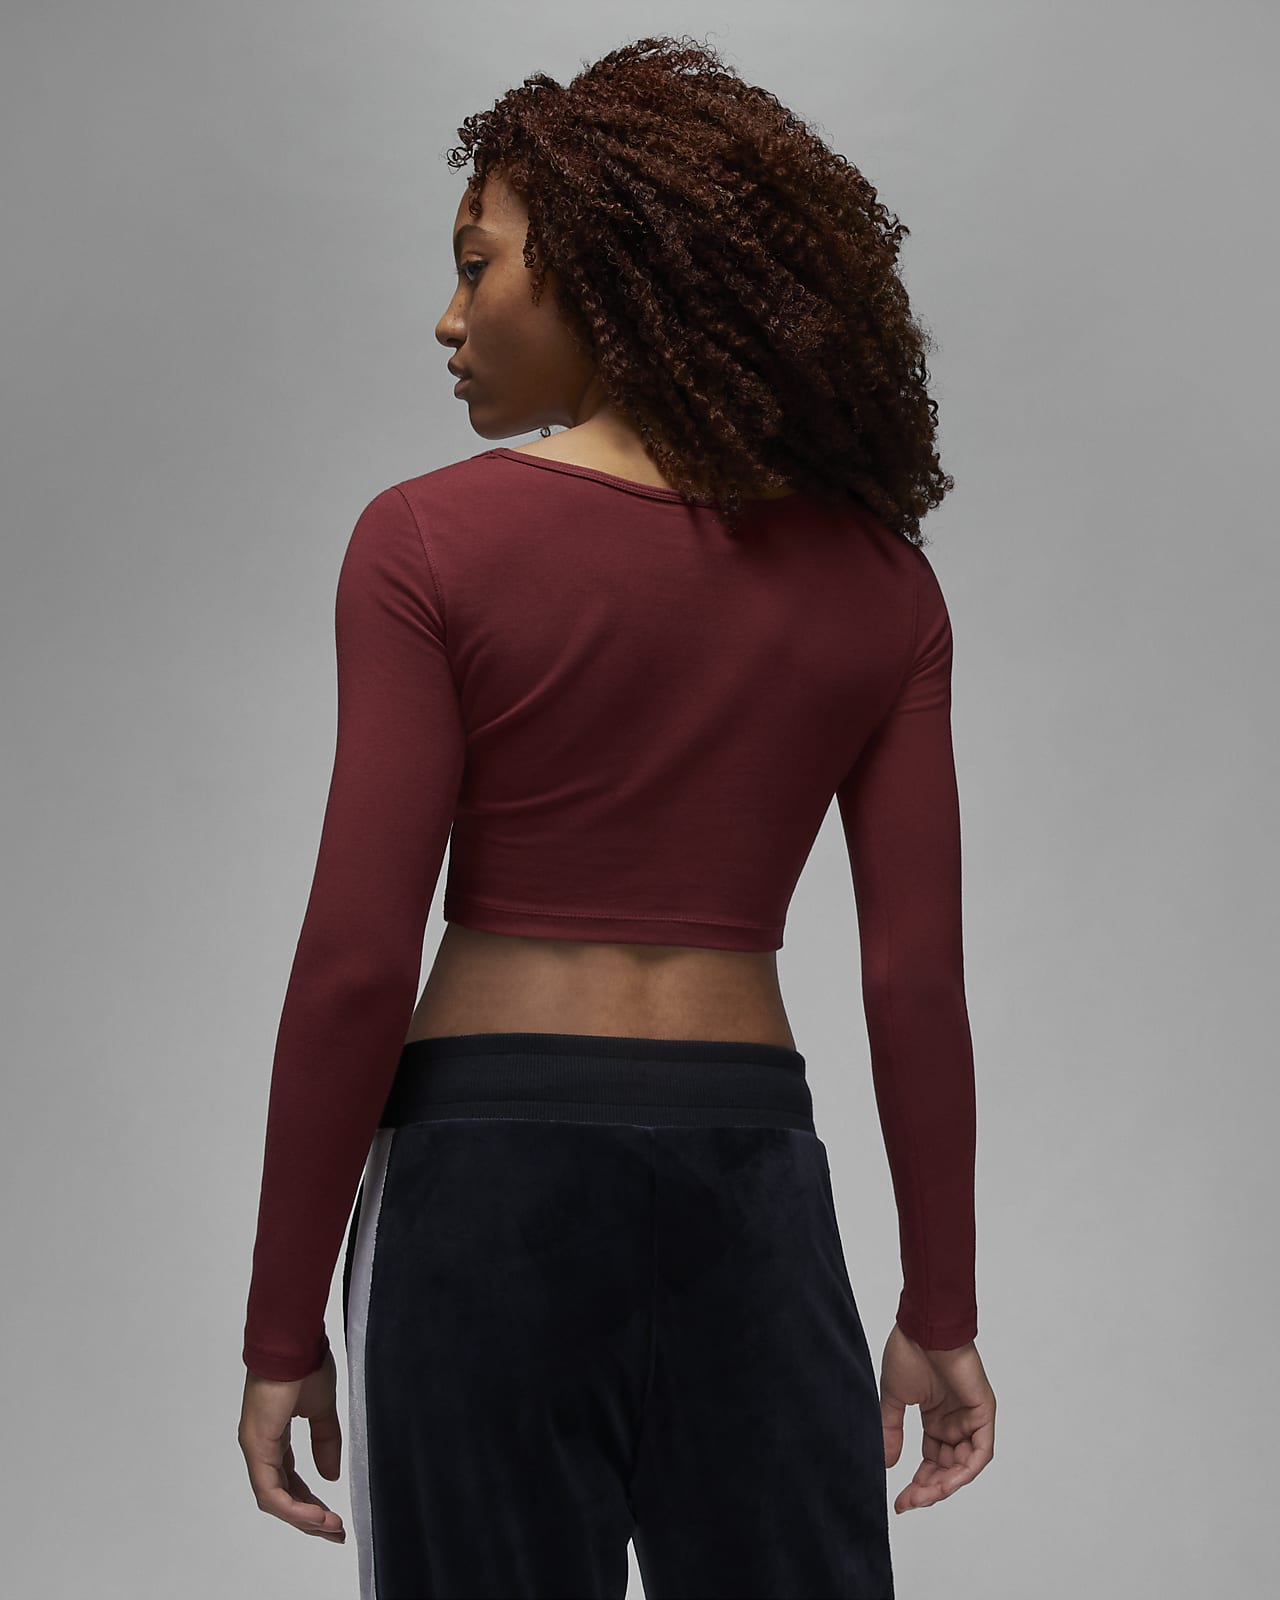 Jordan Women's Long-Sleeve Crop Top. Nike LU